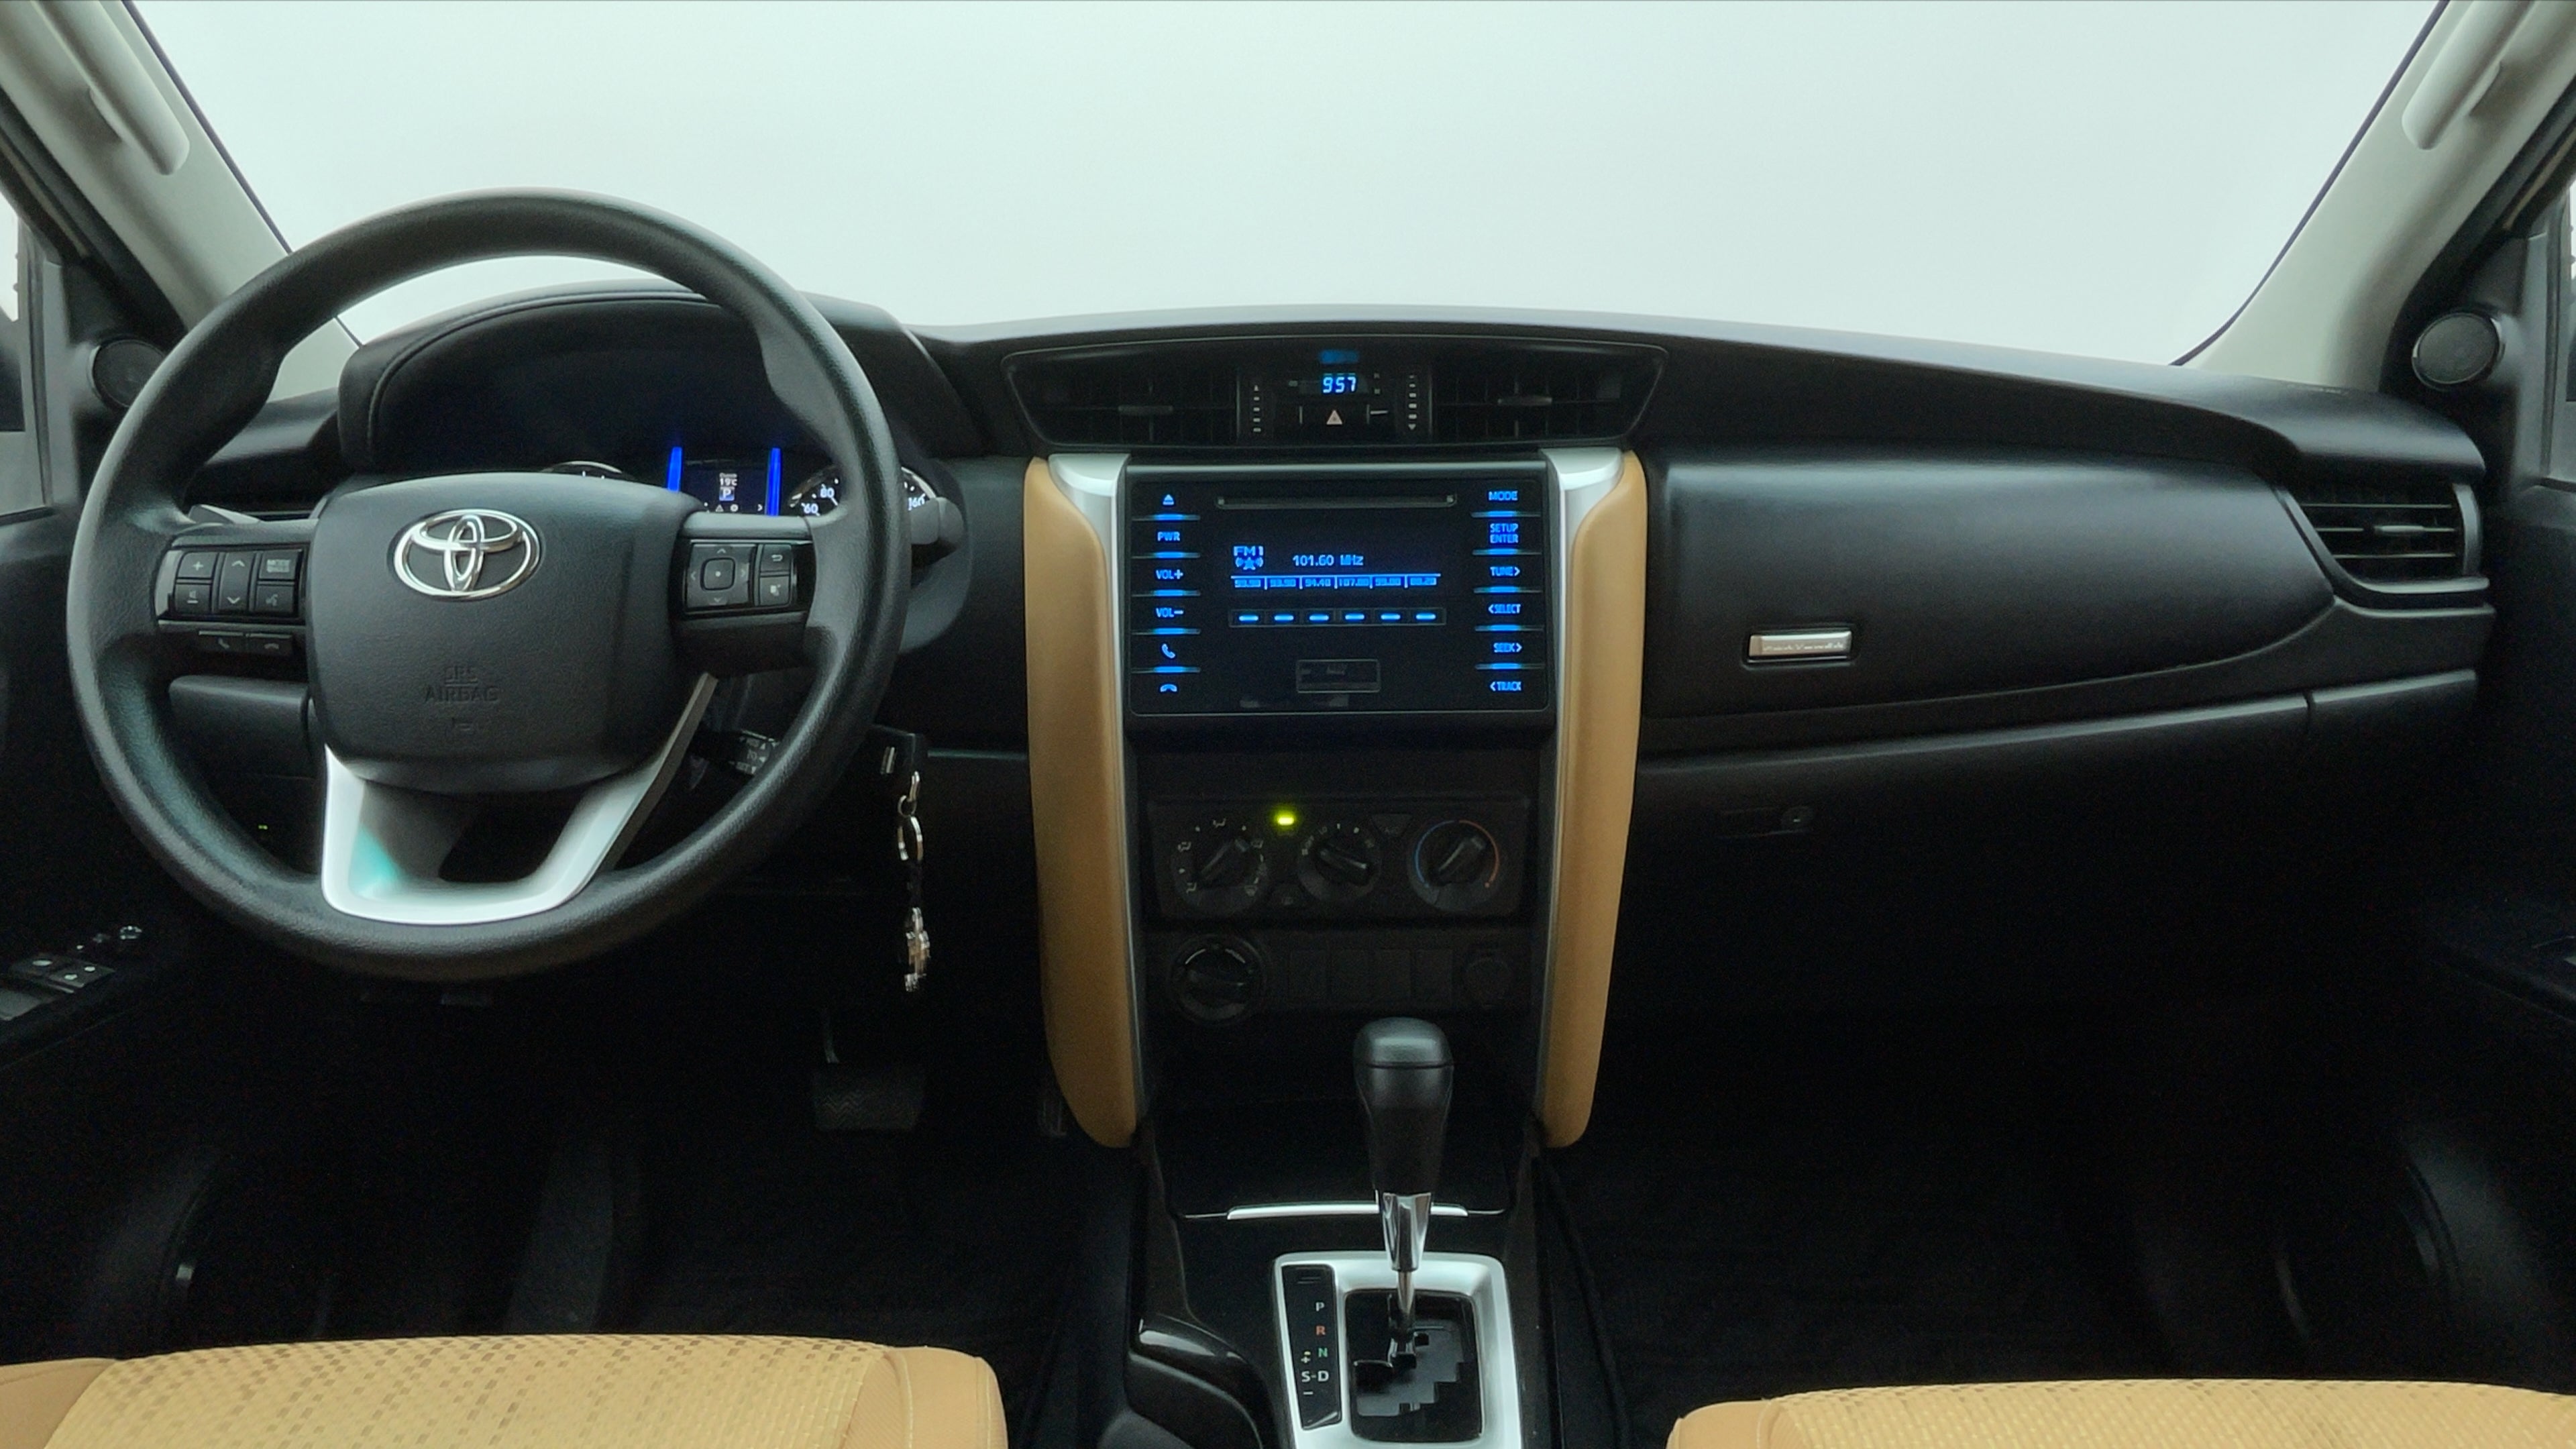 Toyota Fortuner-Dashboard View